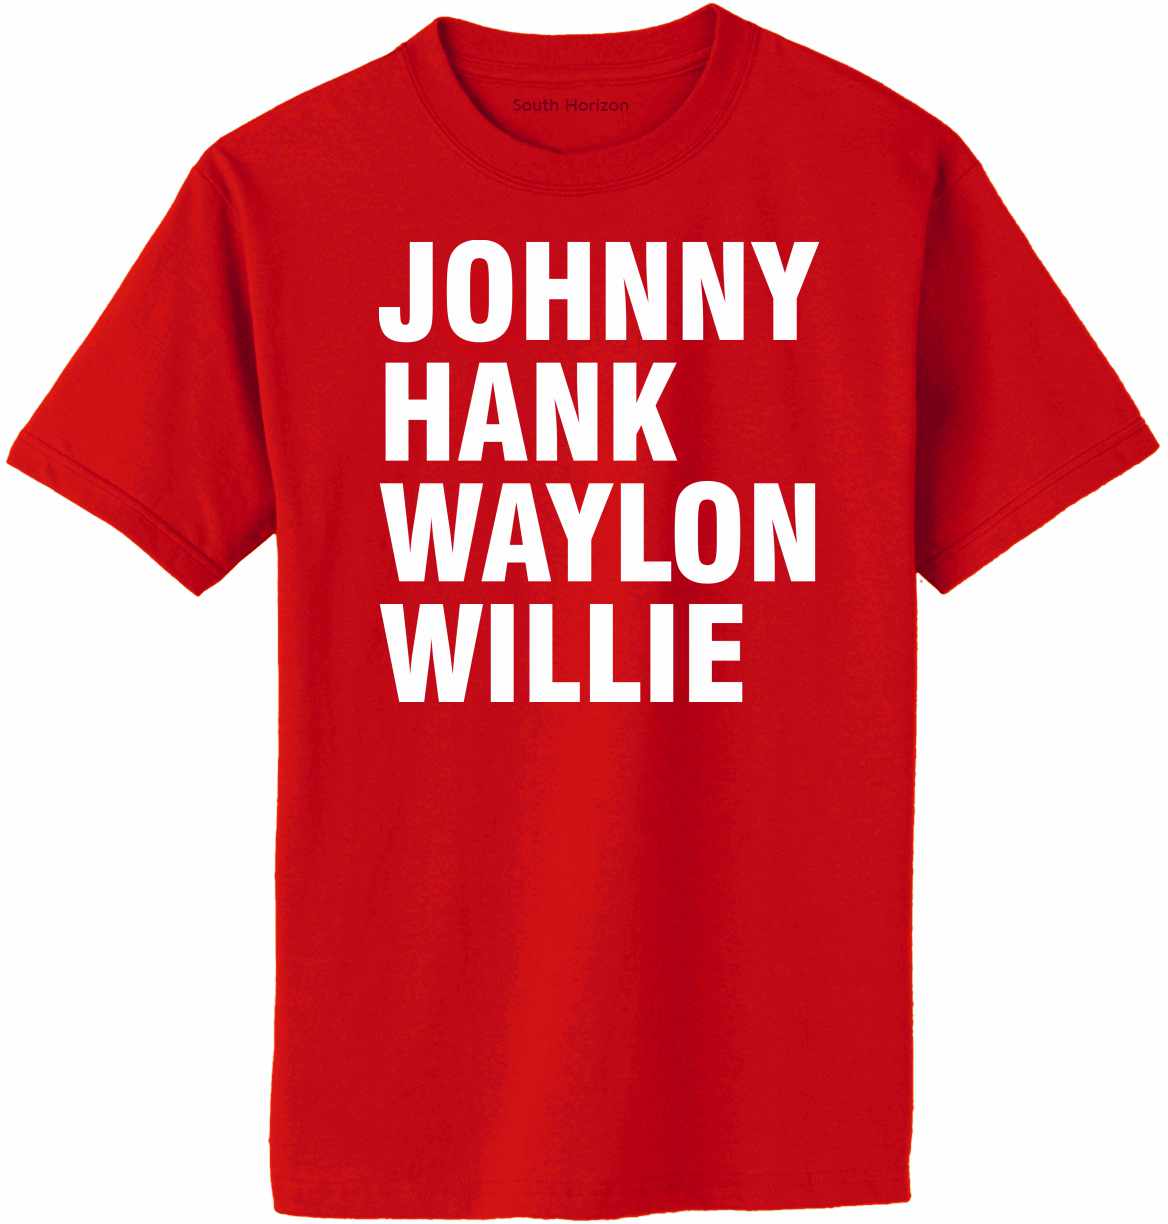 JOHNNY HANK WAYLON WILLIE on Adult T-Shirt (#1229-1)